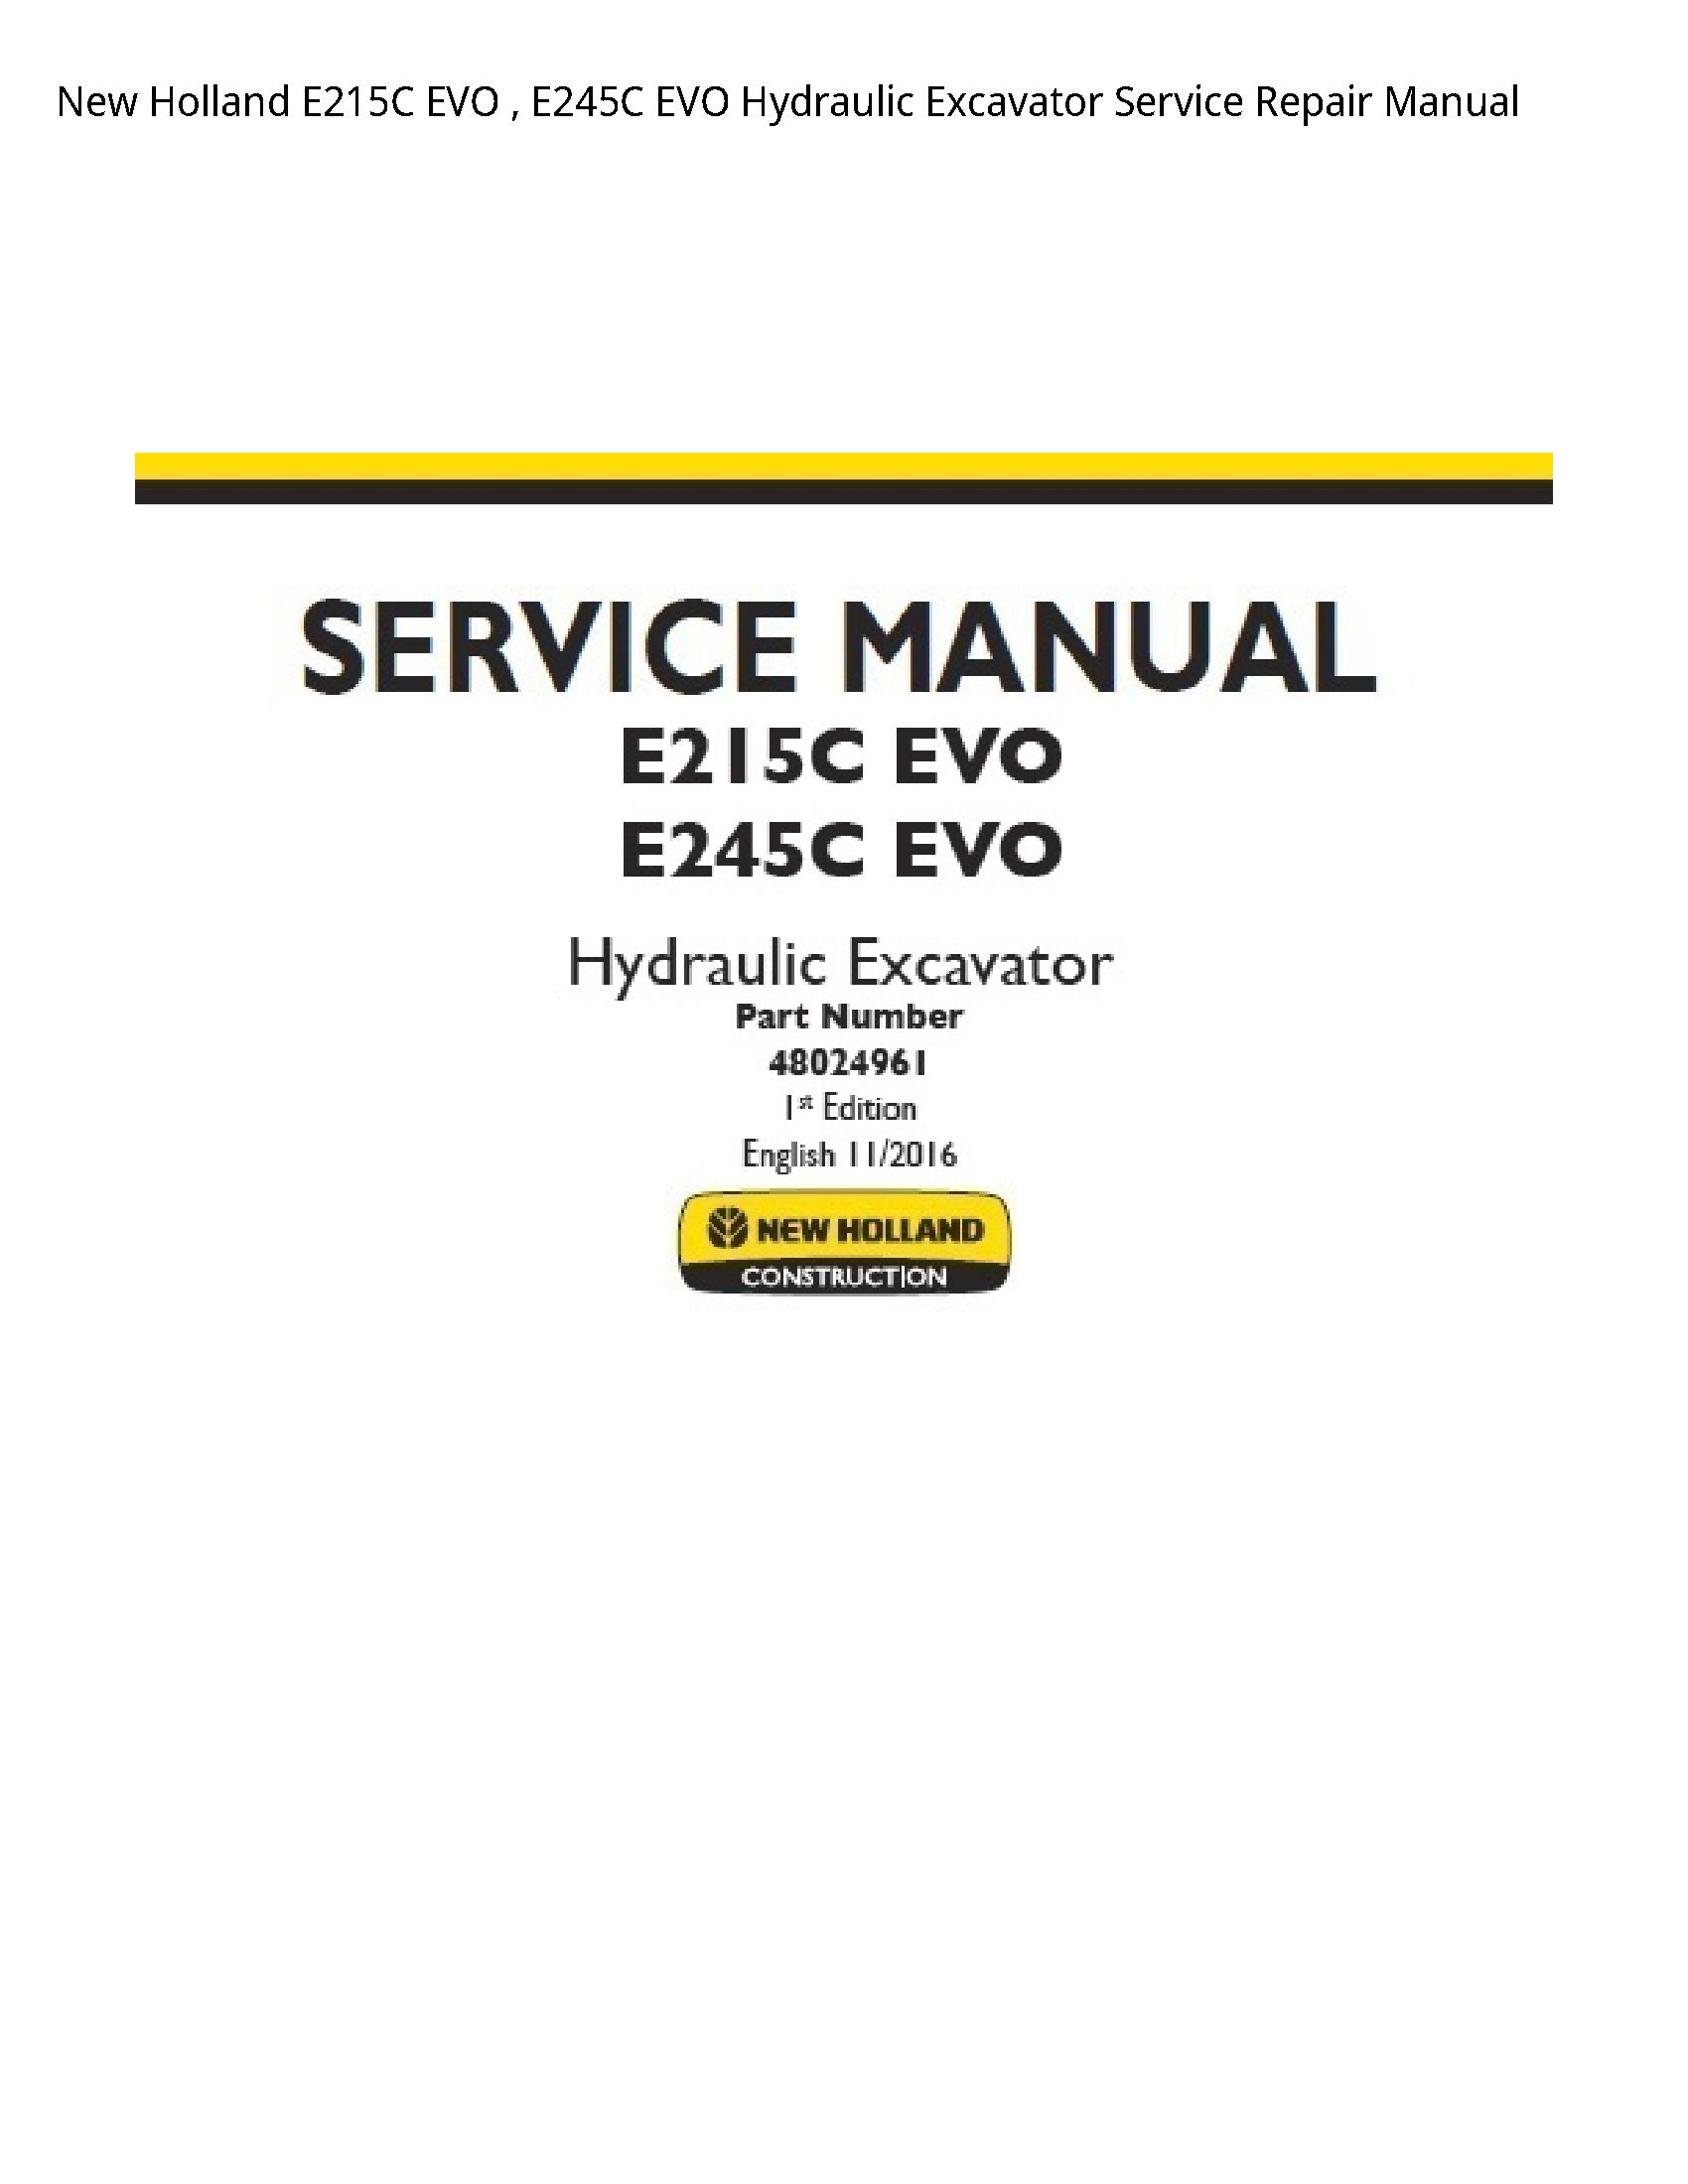 New Holland E215C EVO EVO Hydraulic Excavator manual